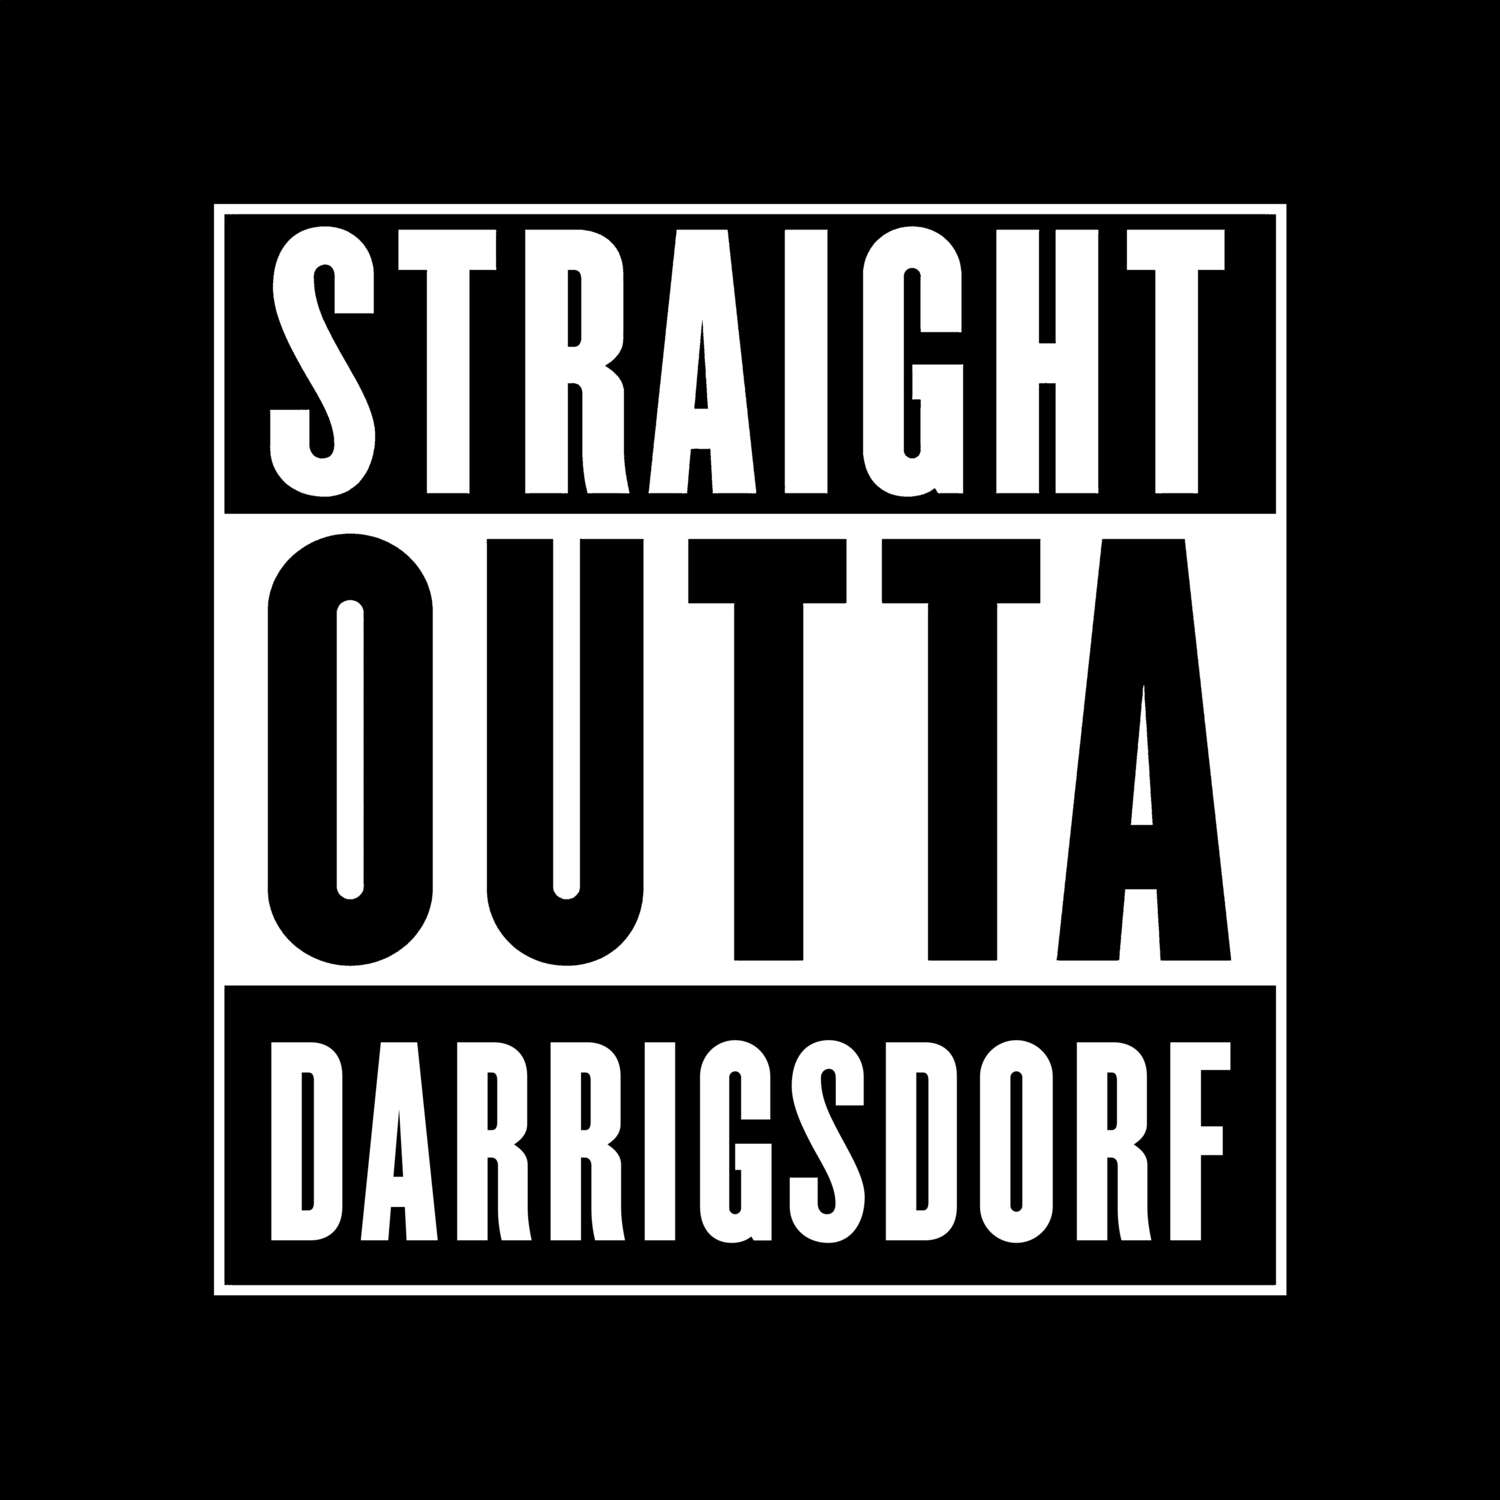 Darrigsdorf T-Shirt »Straight Outta«